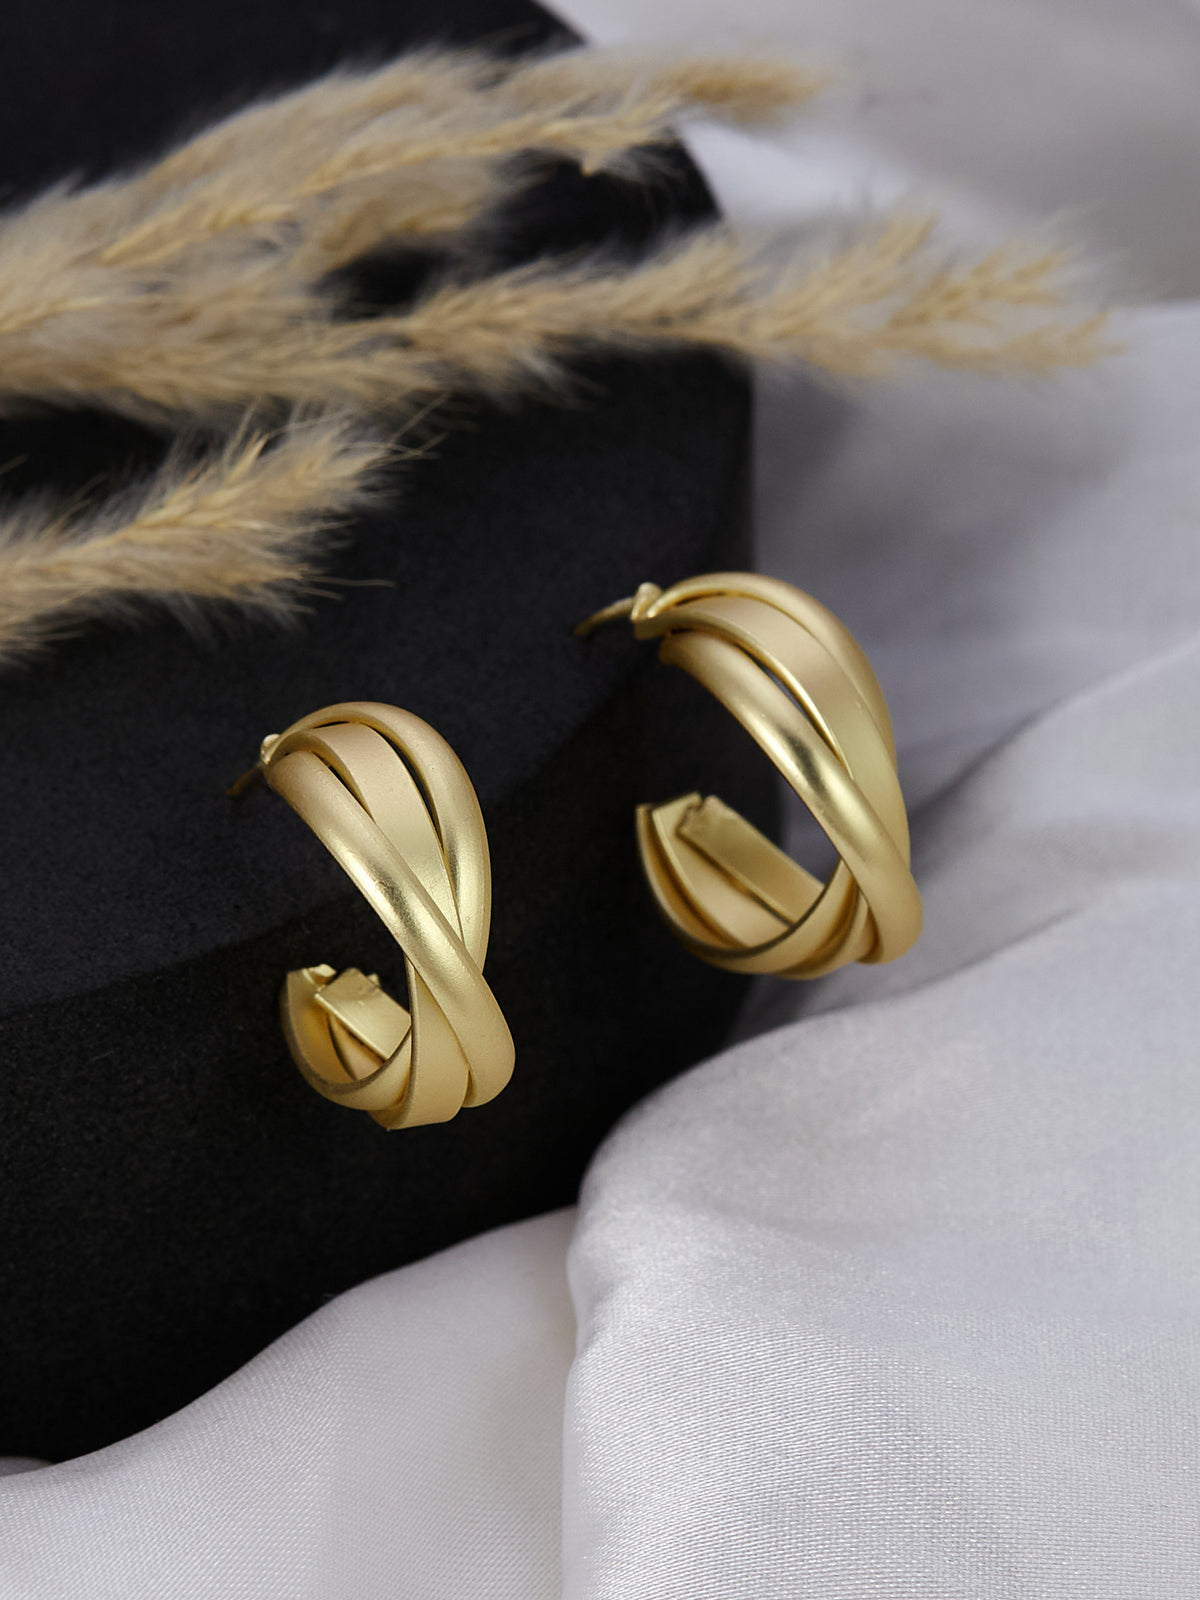 Gold Plated Small Hoop Earrings for women & girls